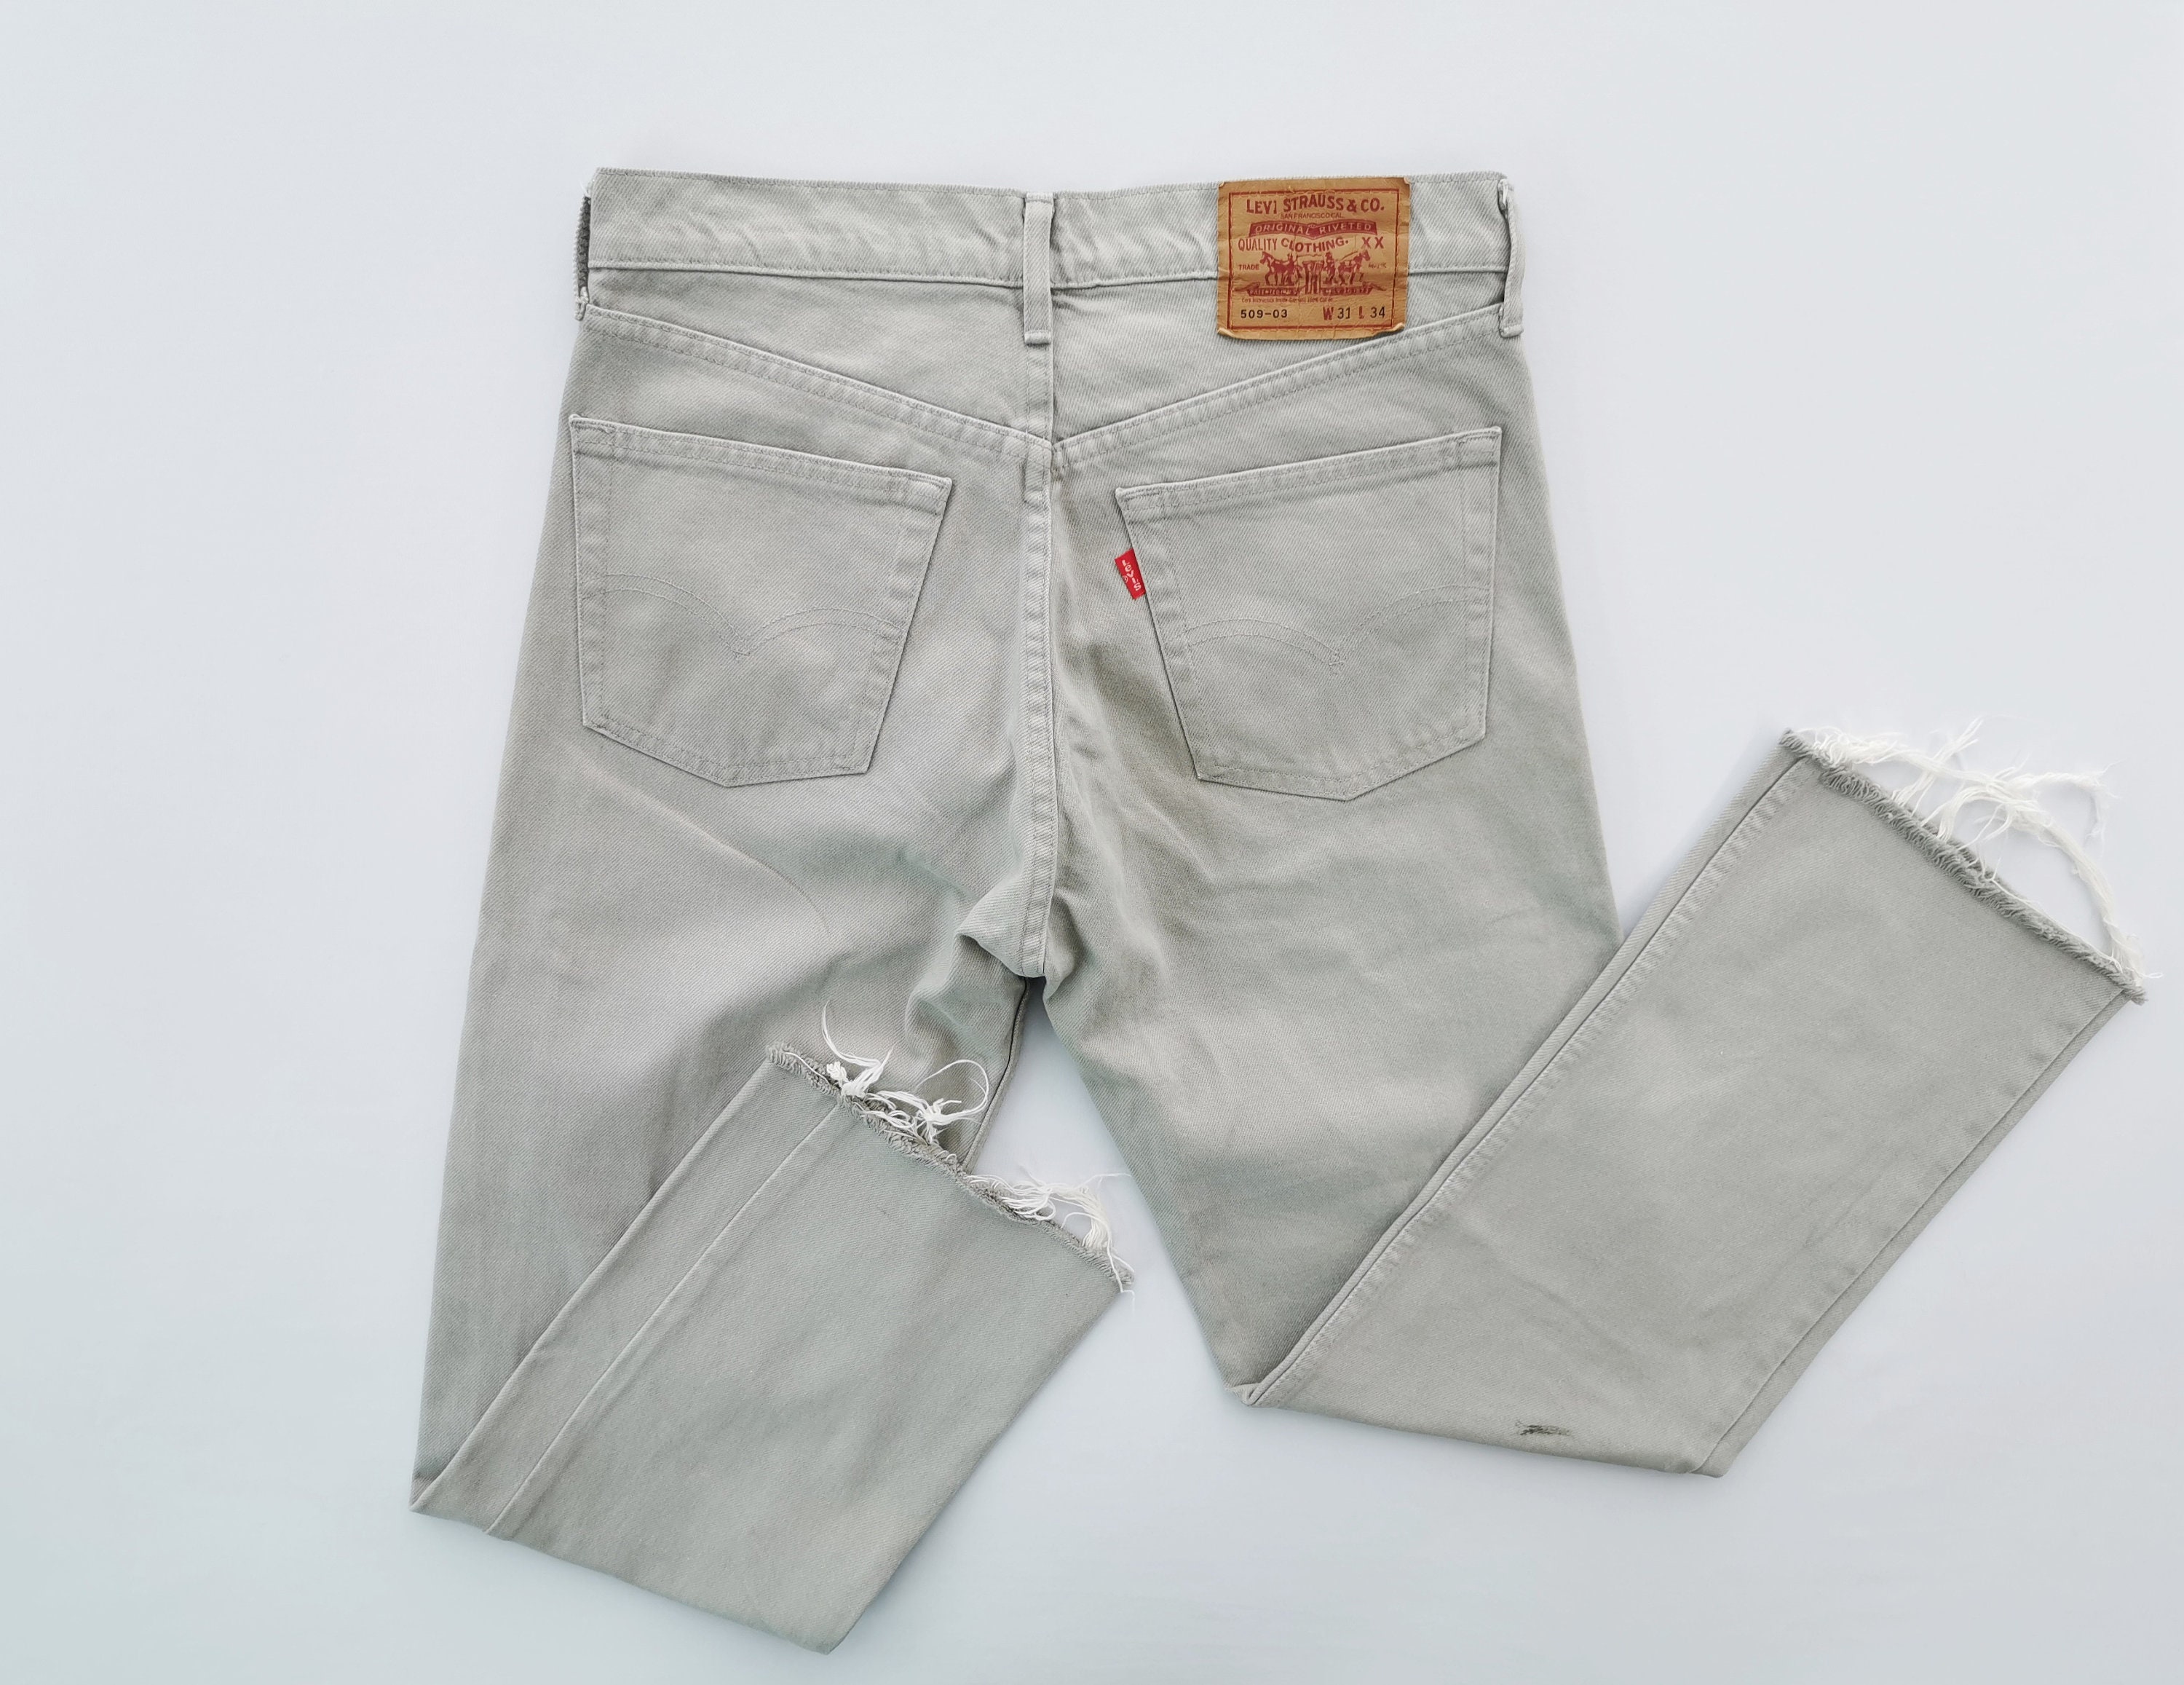 Levis 509-03 Jeans Distressed Vintage Size 31 Levis Jeans - Etsy Denmark